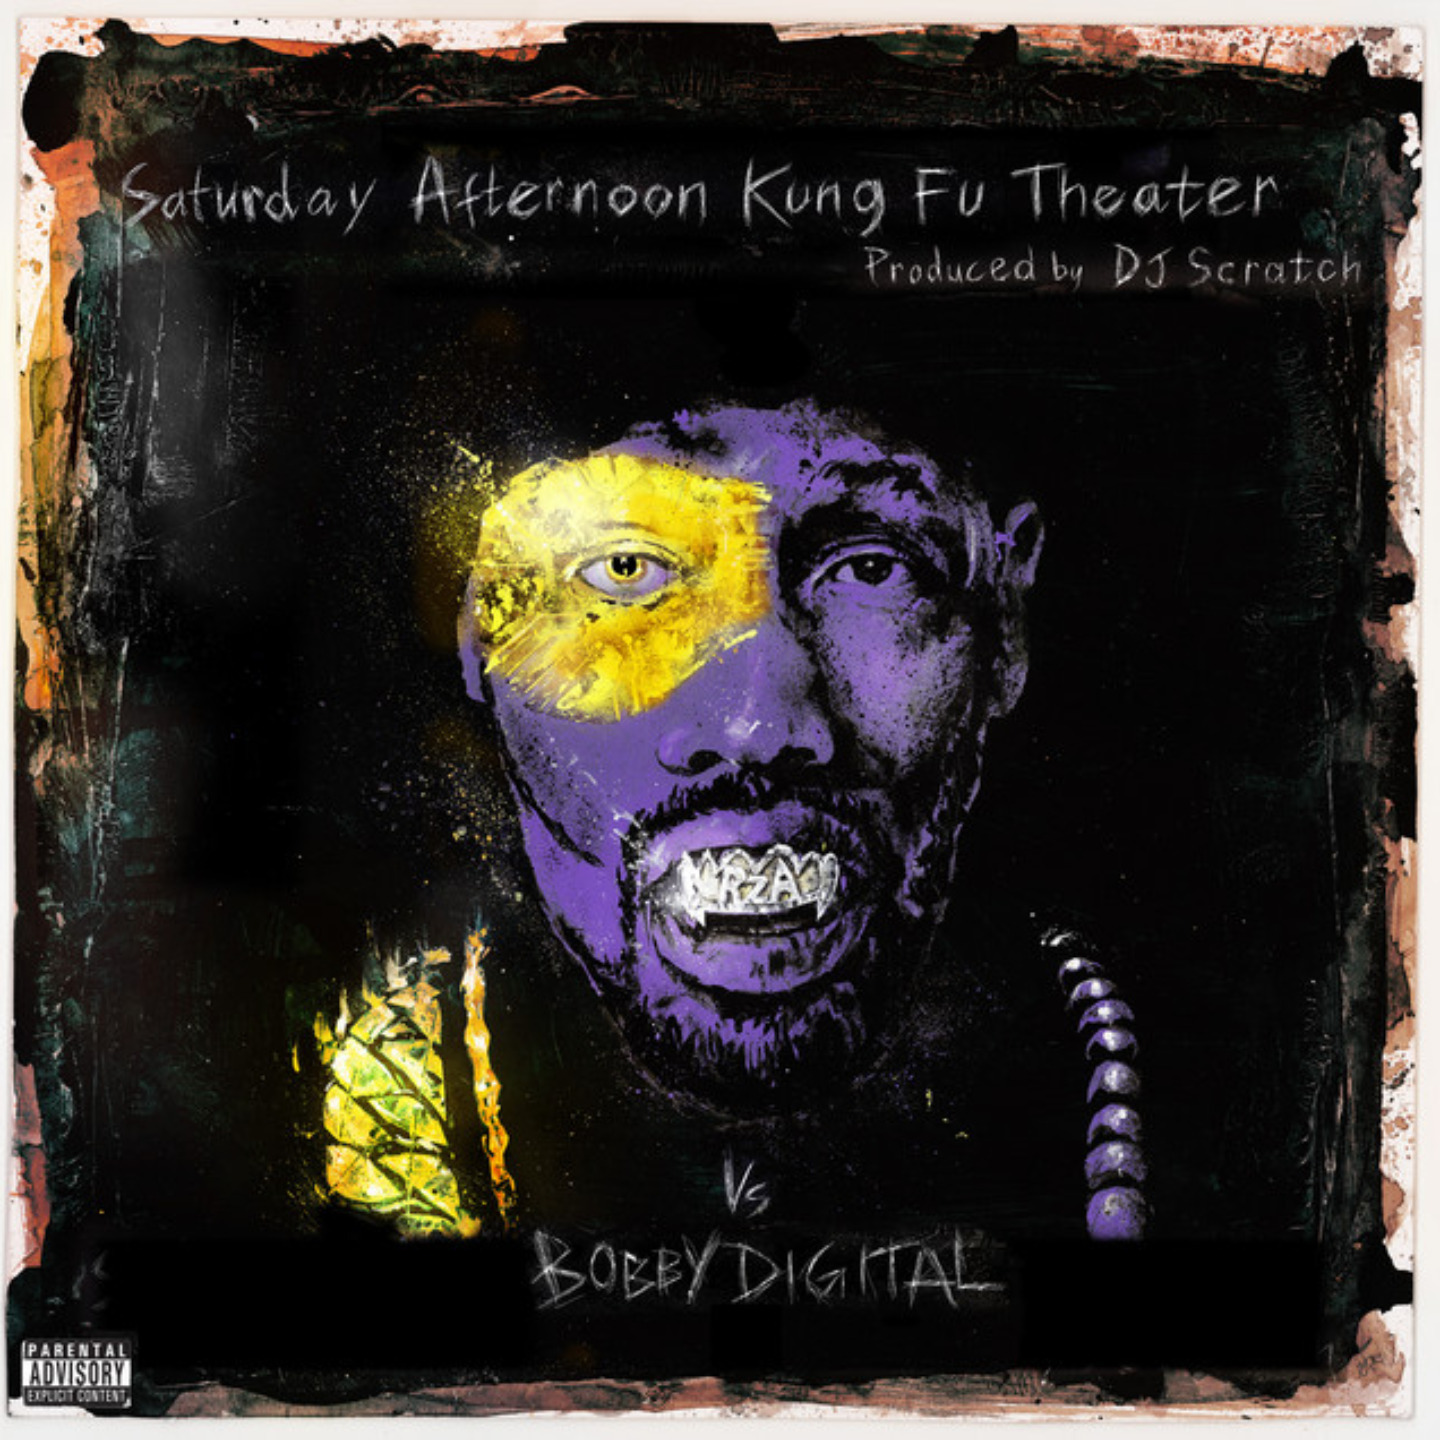 RZA VS BOBBY DIGITAL - Saturday Afternoon Kung Fu Theater LP